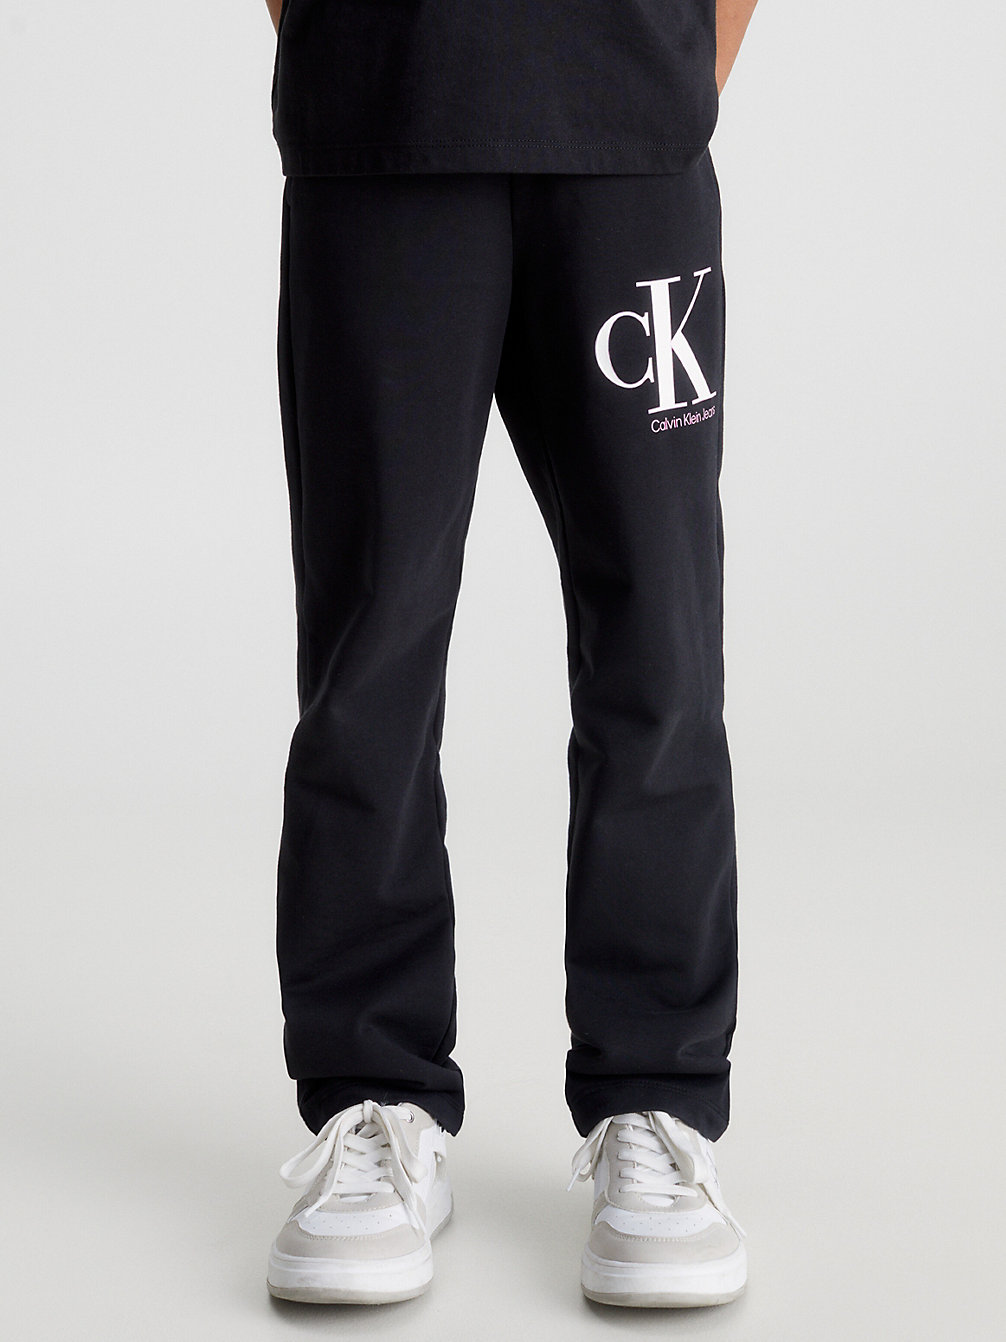 CK BLACK Logo Joggers undefined girls Calvin Klein